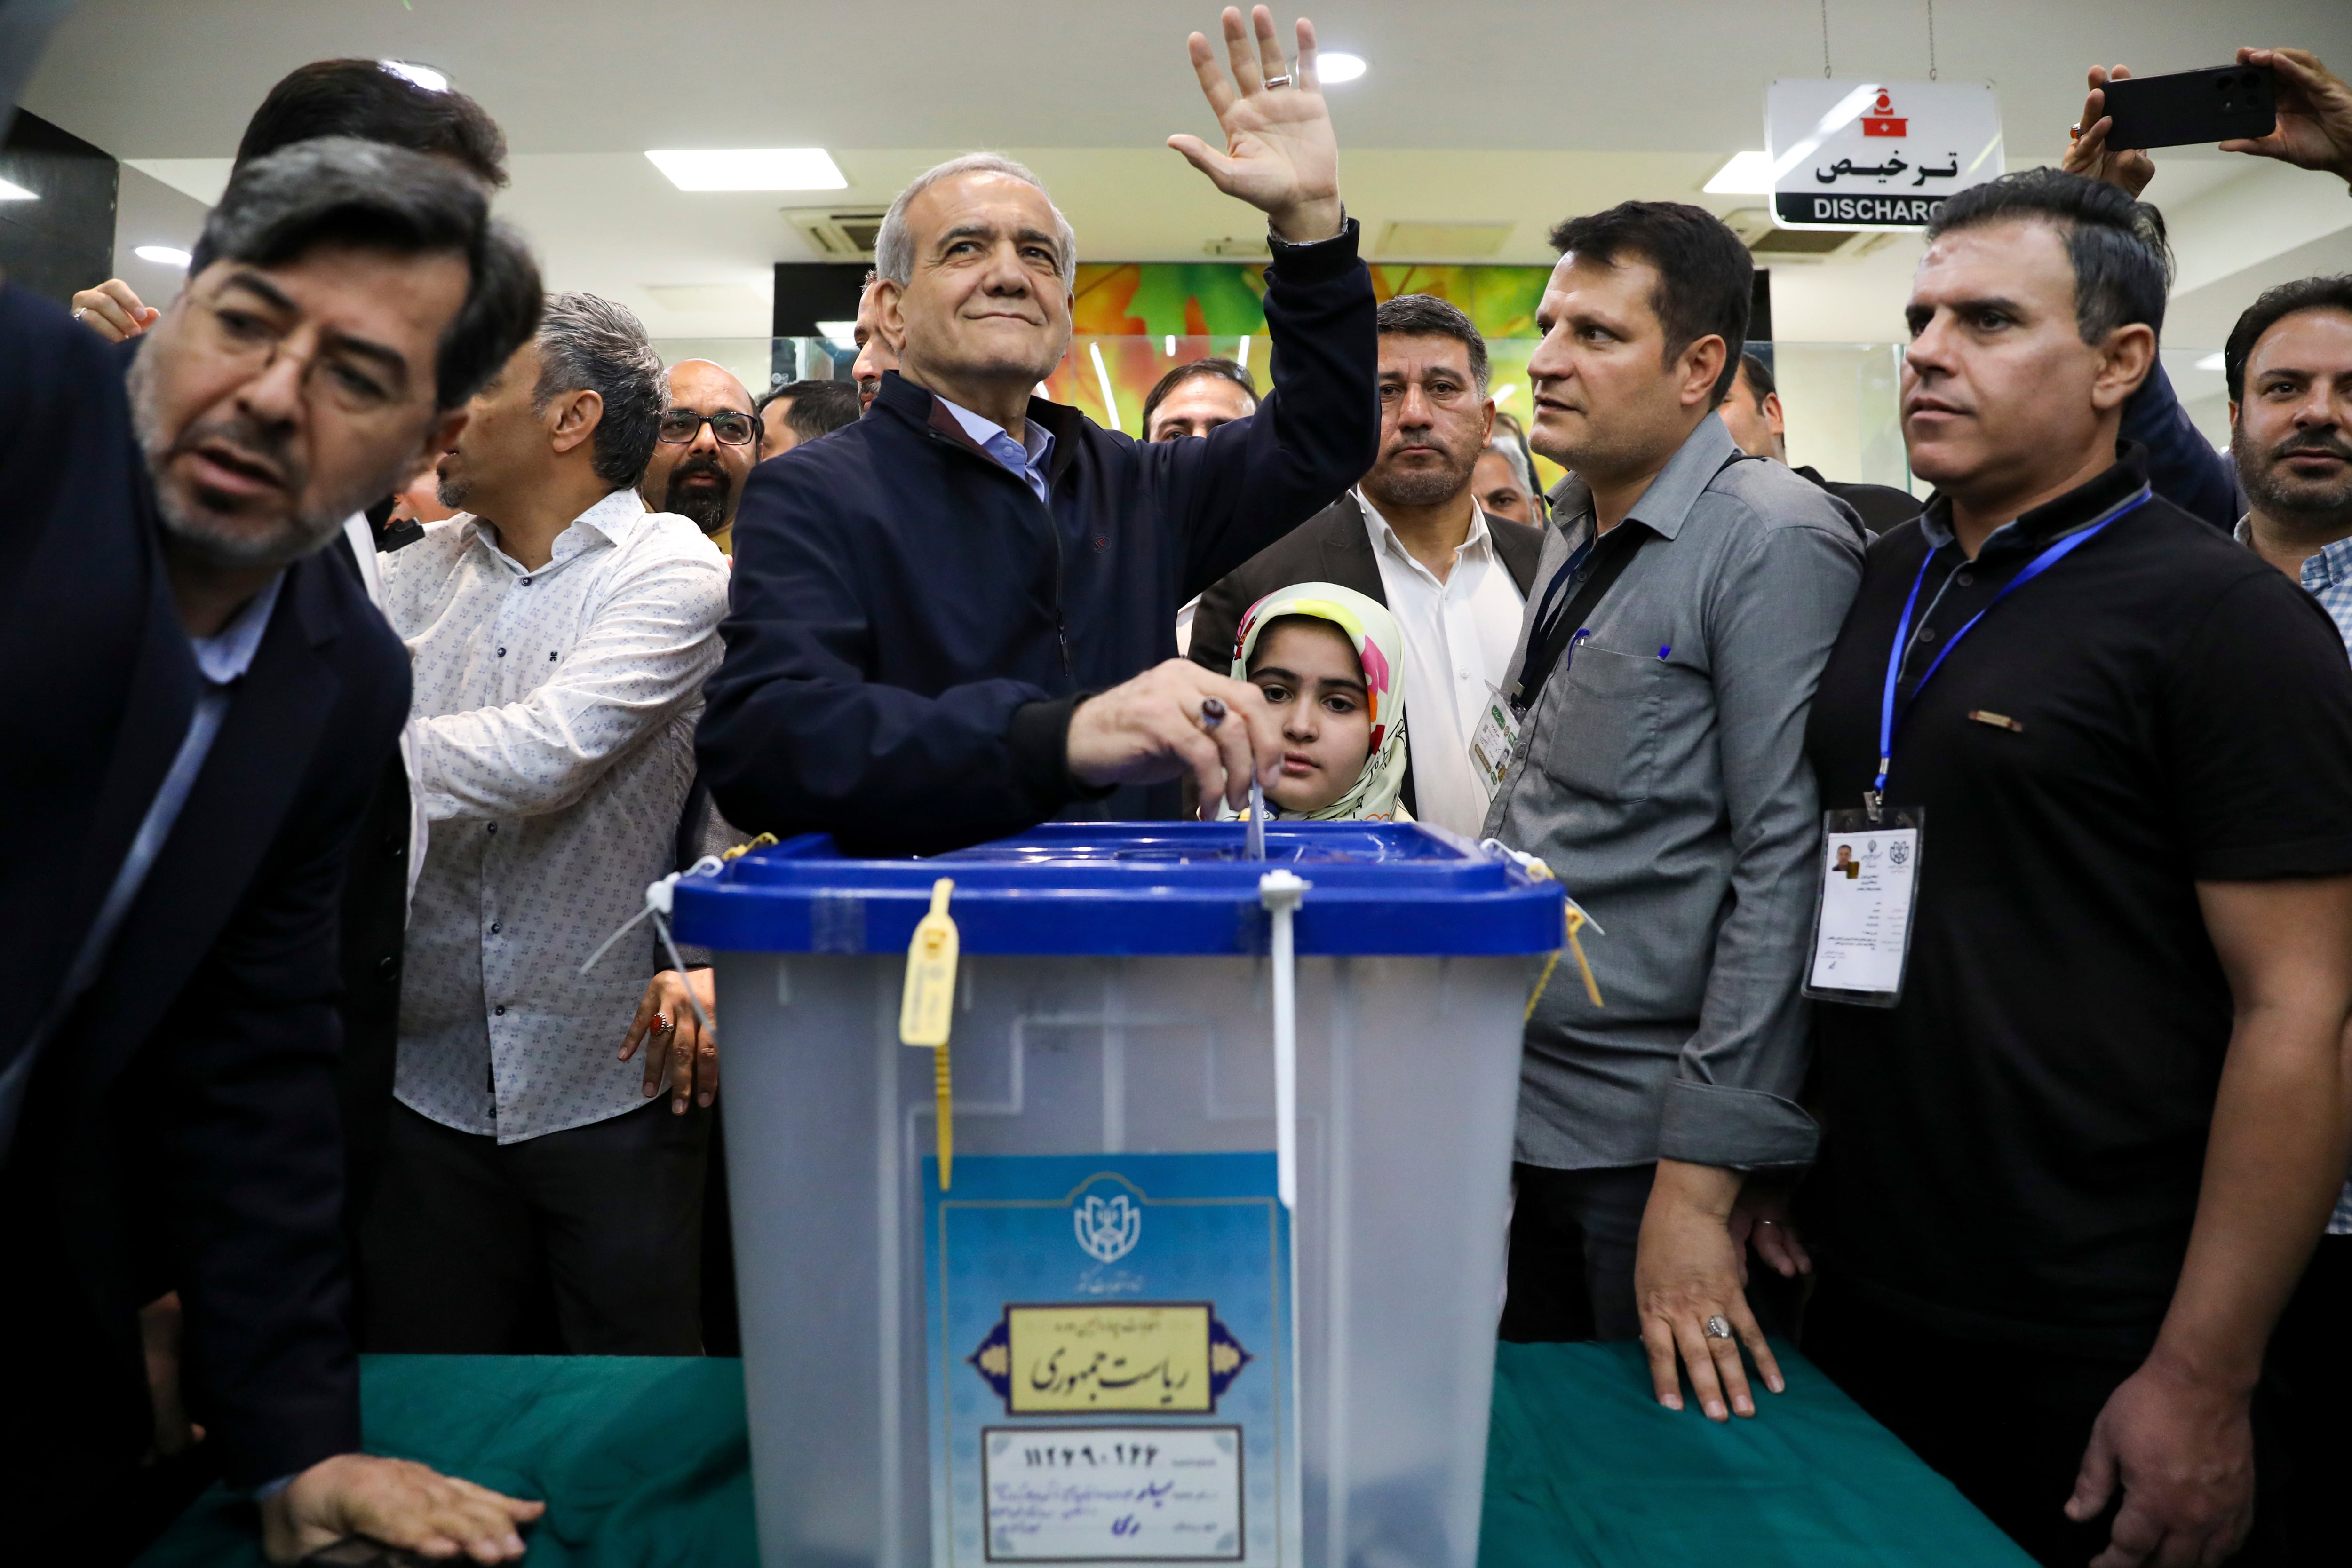 El candidato reformista a la presidencia de Irán, Masoud Pezeshkian, deposita su voto (Majid Khahi/ISNA vía AP)